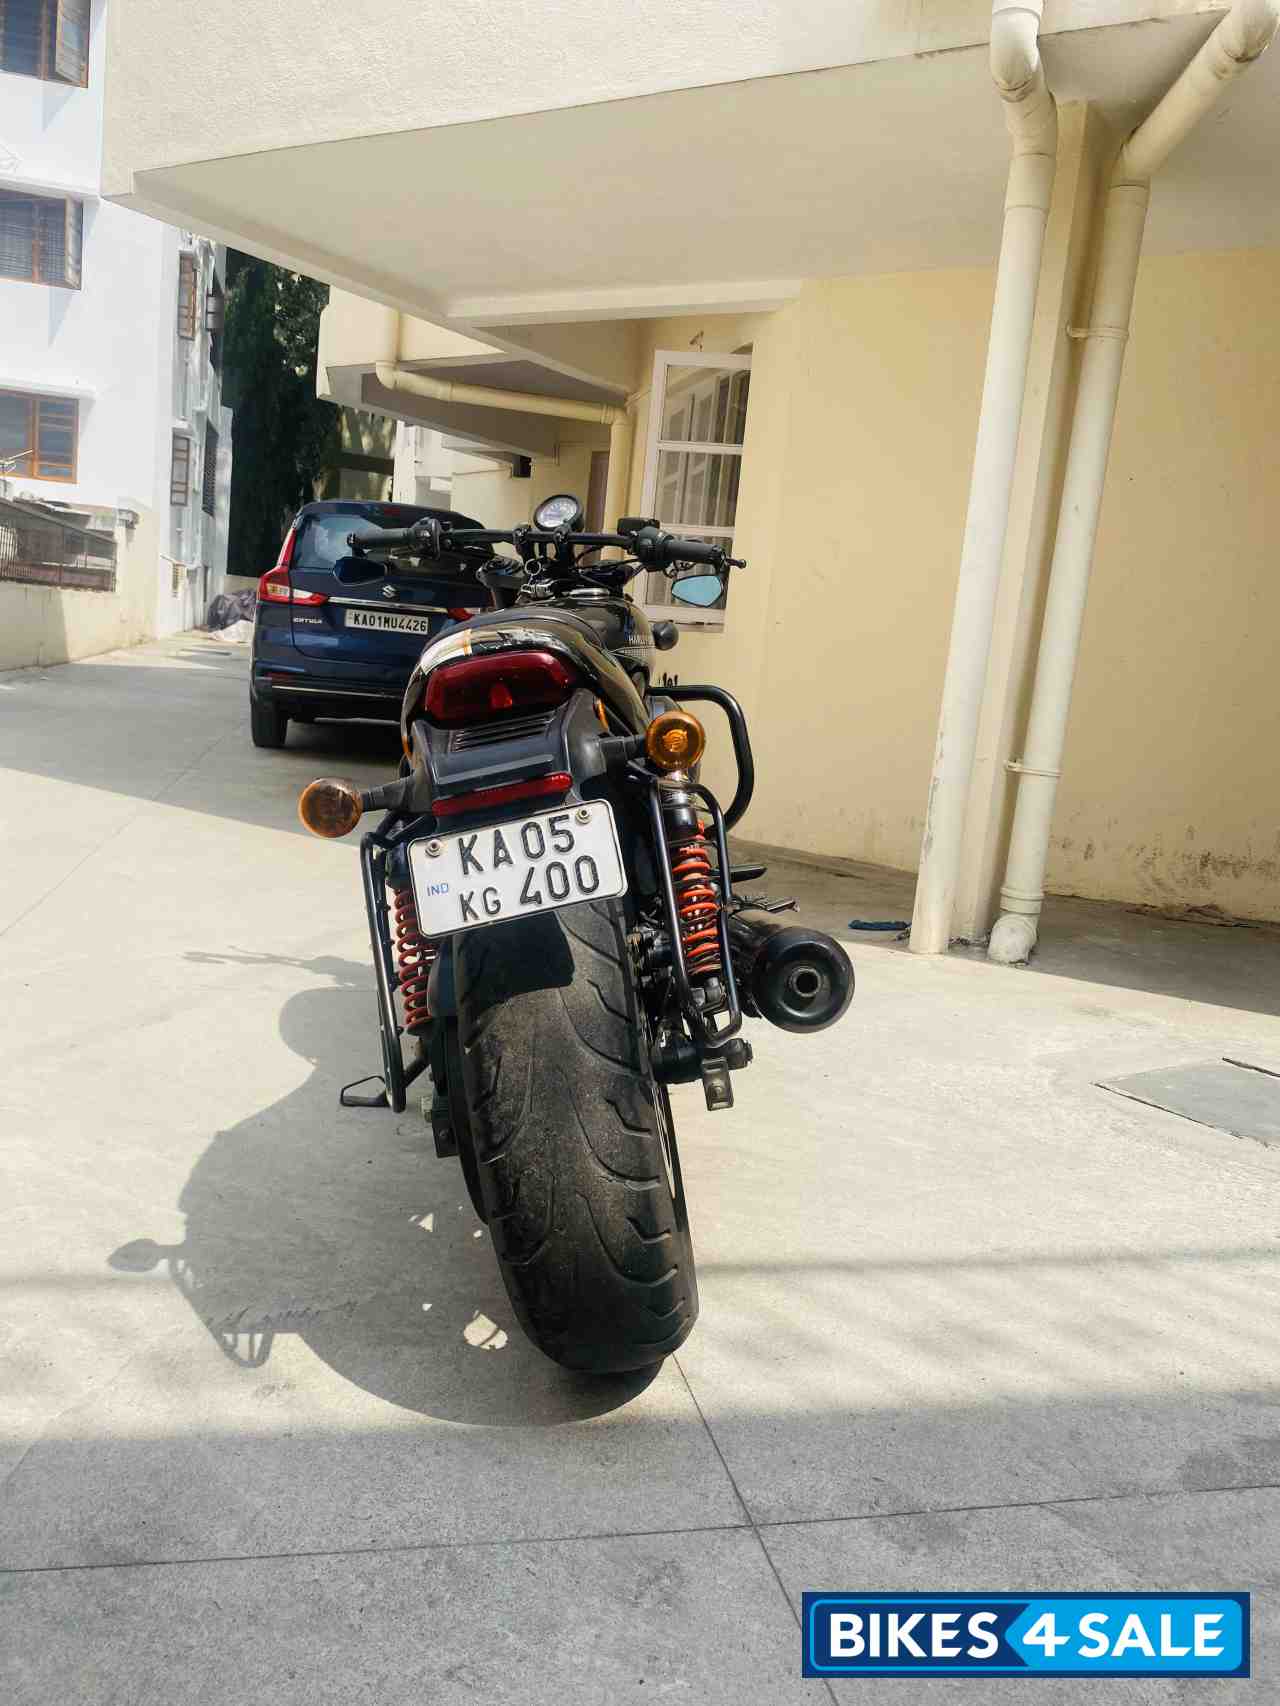 Black Harley Davidson Street Rod